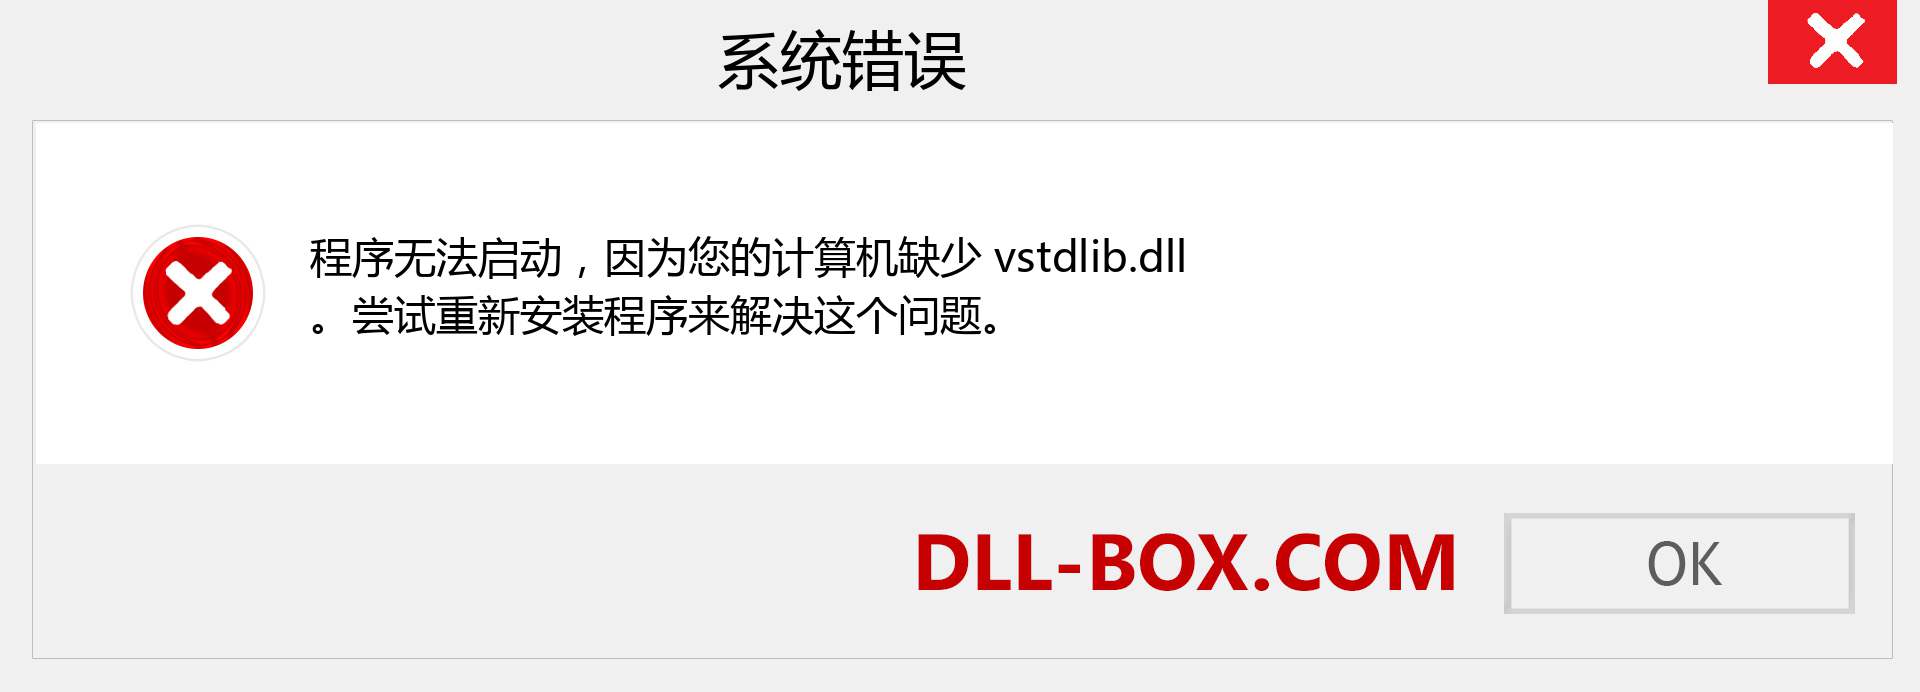 vstdlib.dll 文件丢失？。 适用于 Windows 7、8、10 的下载 - 修复 Windows、照片、图像上的 vstdlib dll 丢失错误